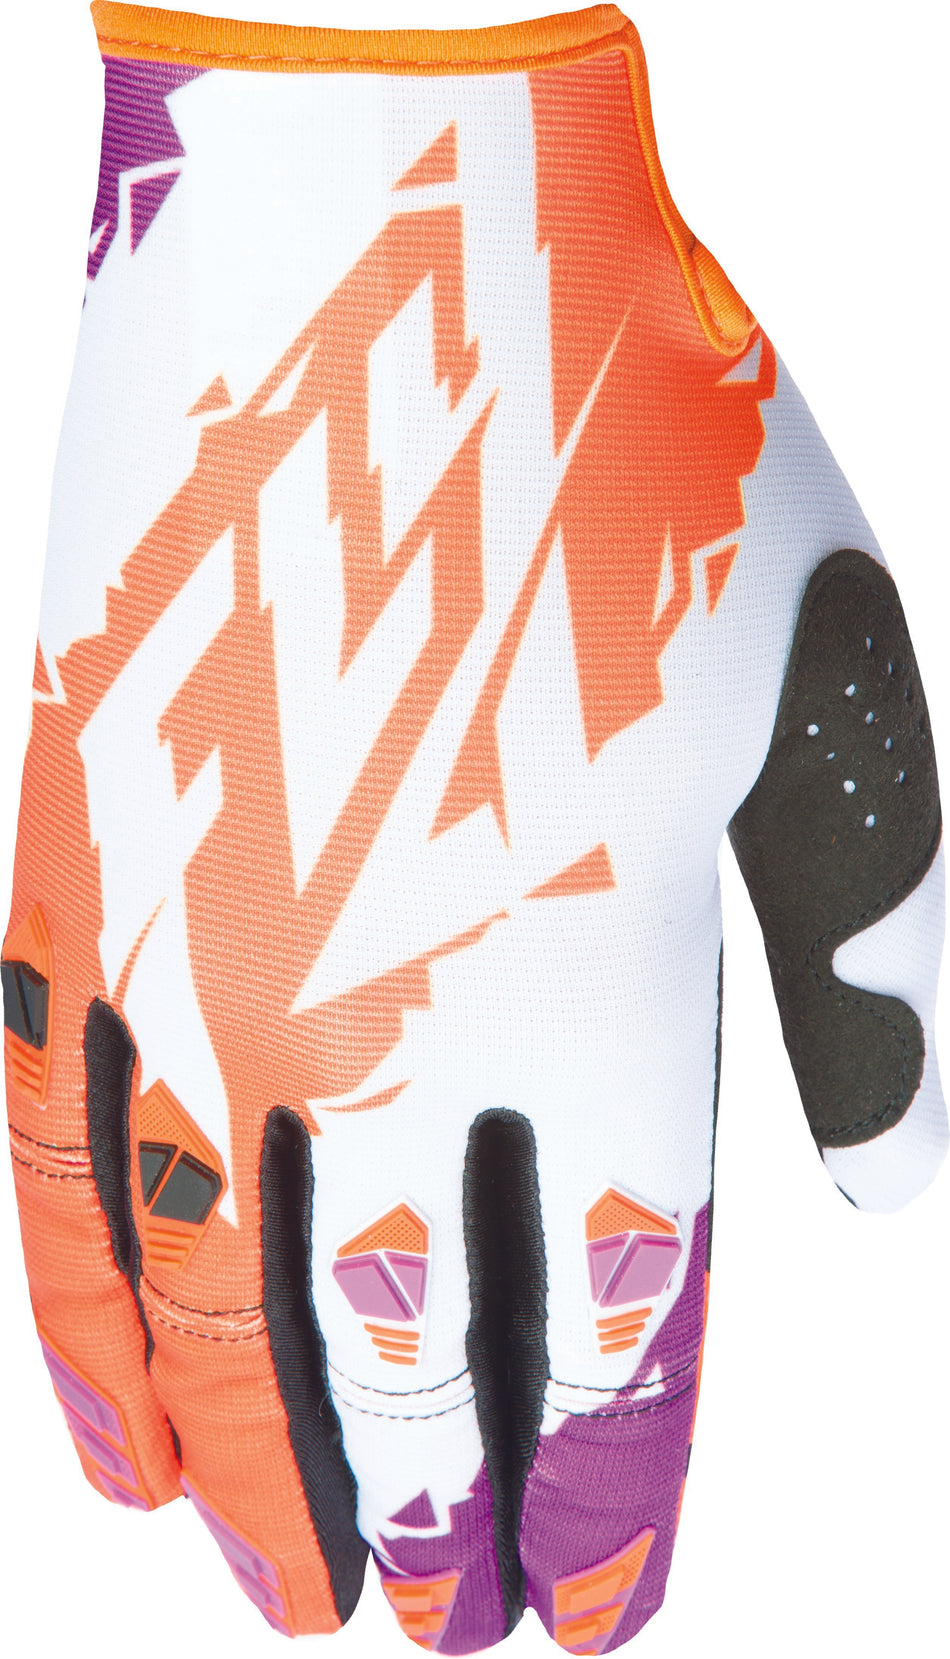 FLY RACING Kinetic Crux Gloves Orange/Purple Sz 6 370-41706